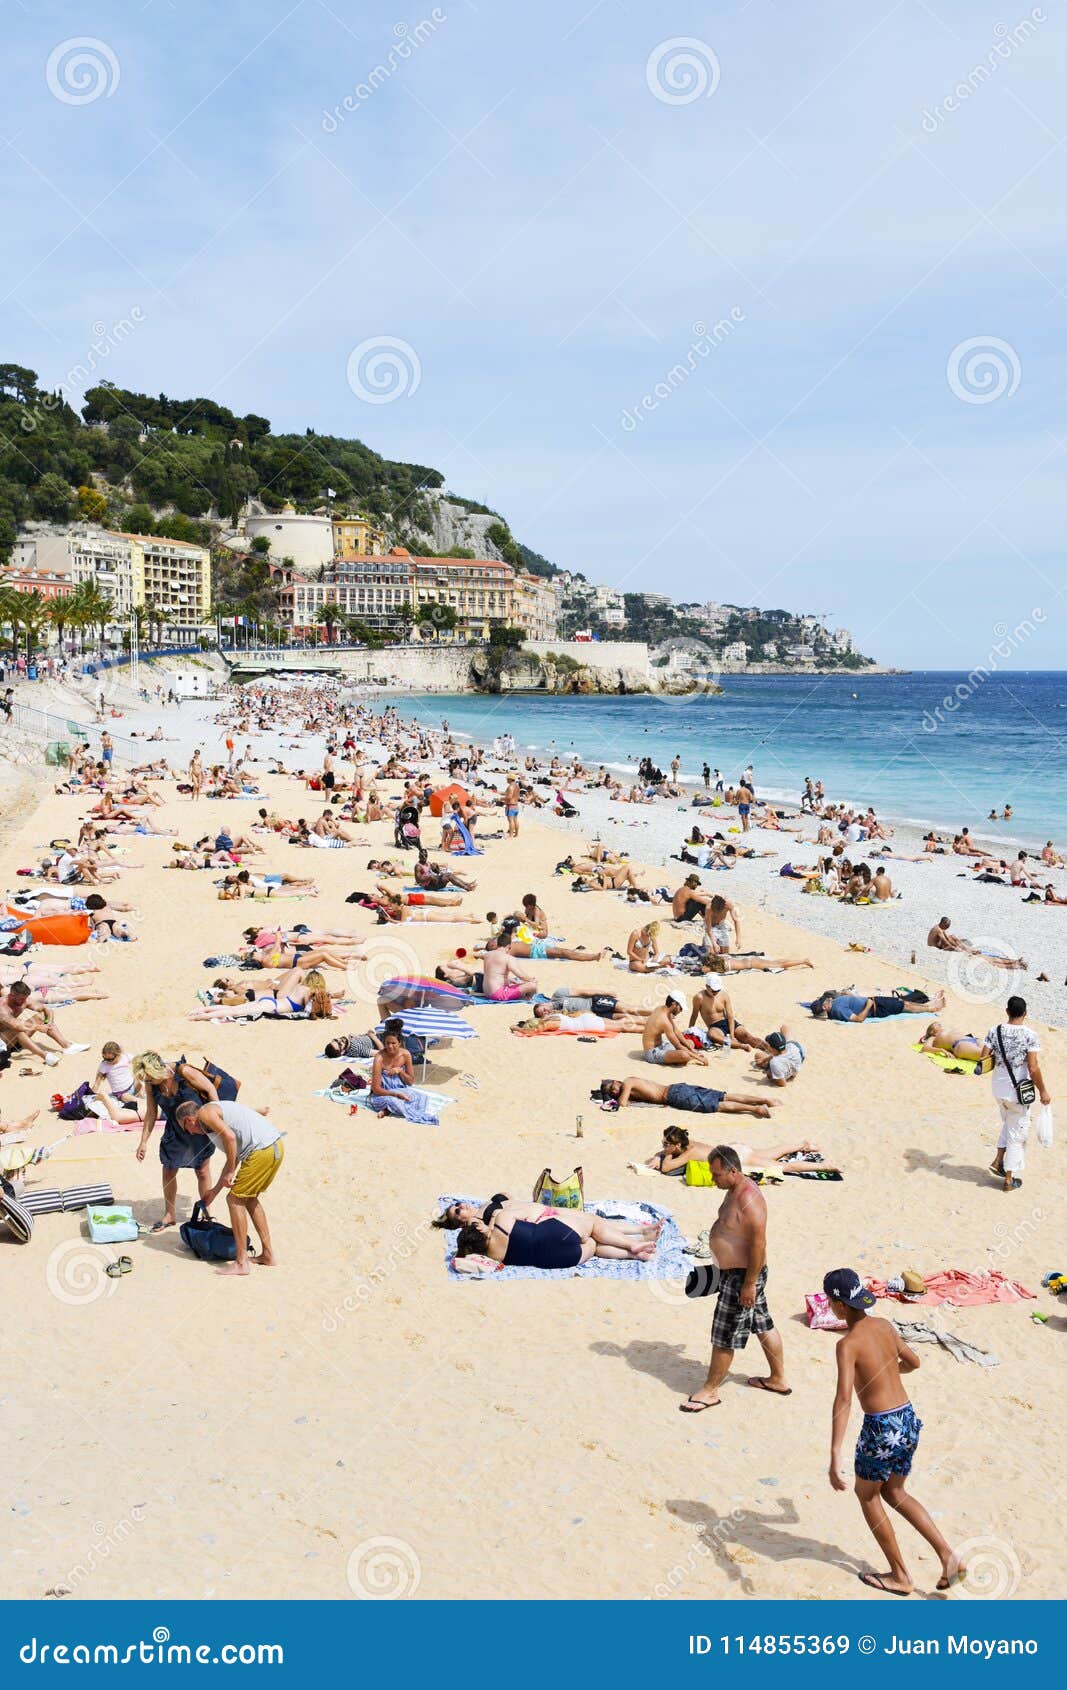 People Sunbathing On The Beach In Antibes, France 